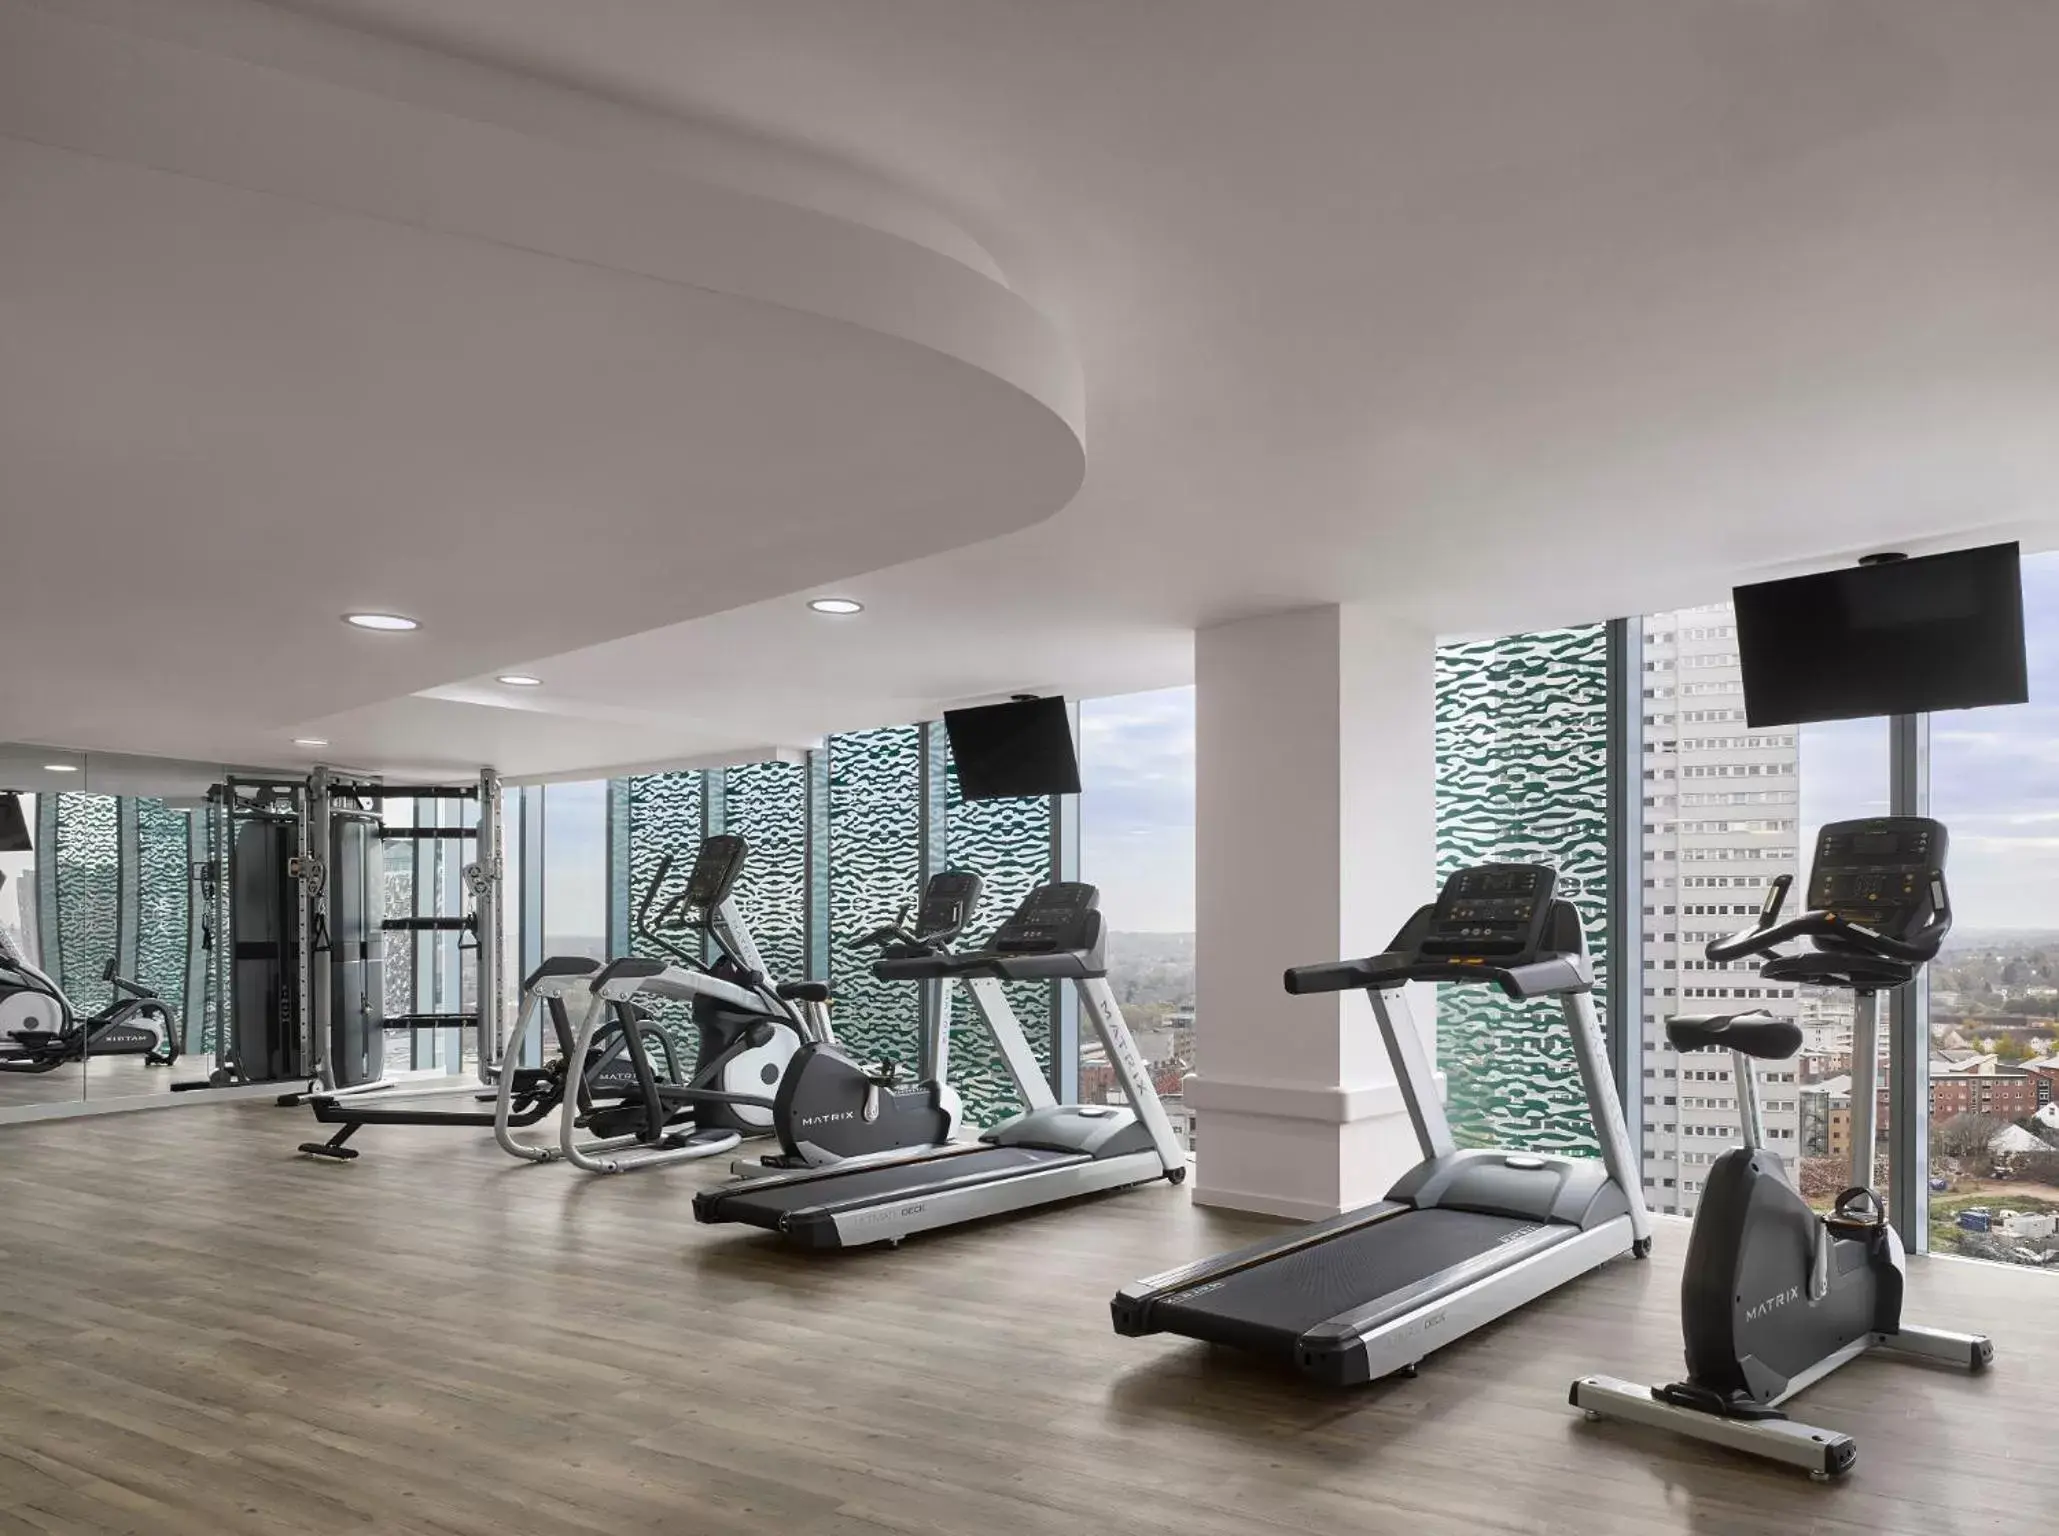 Fitness centre/facilities, Fitness Center/Facilities in Radisson Blu Hotel, Birmingham